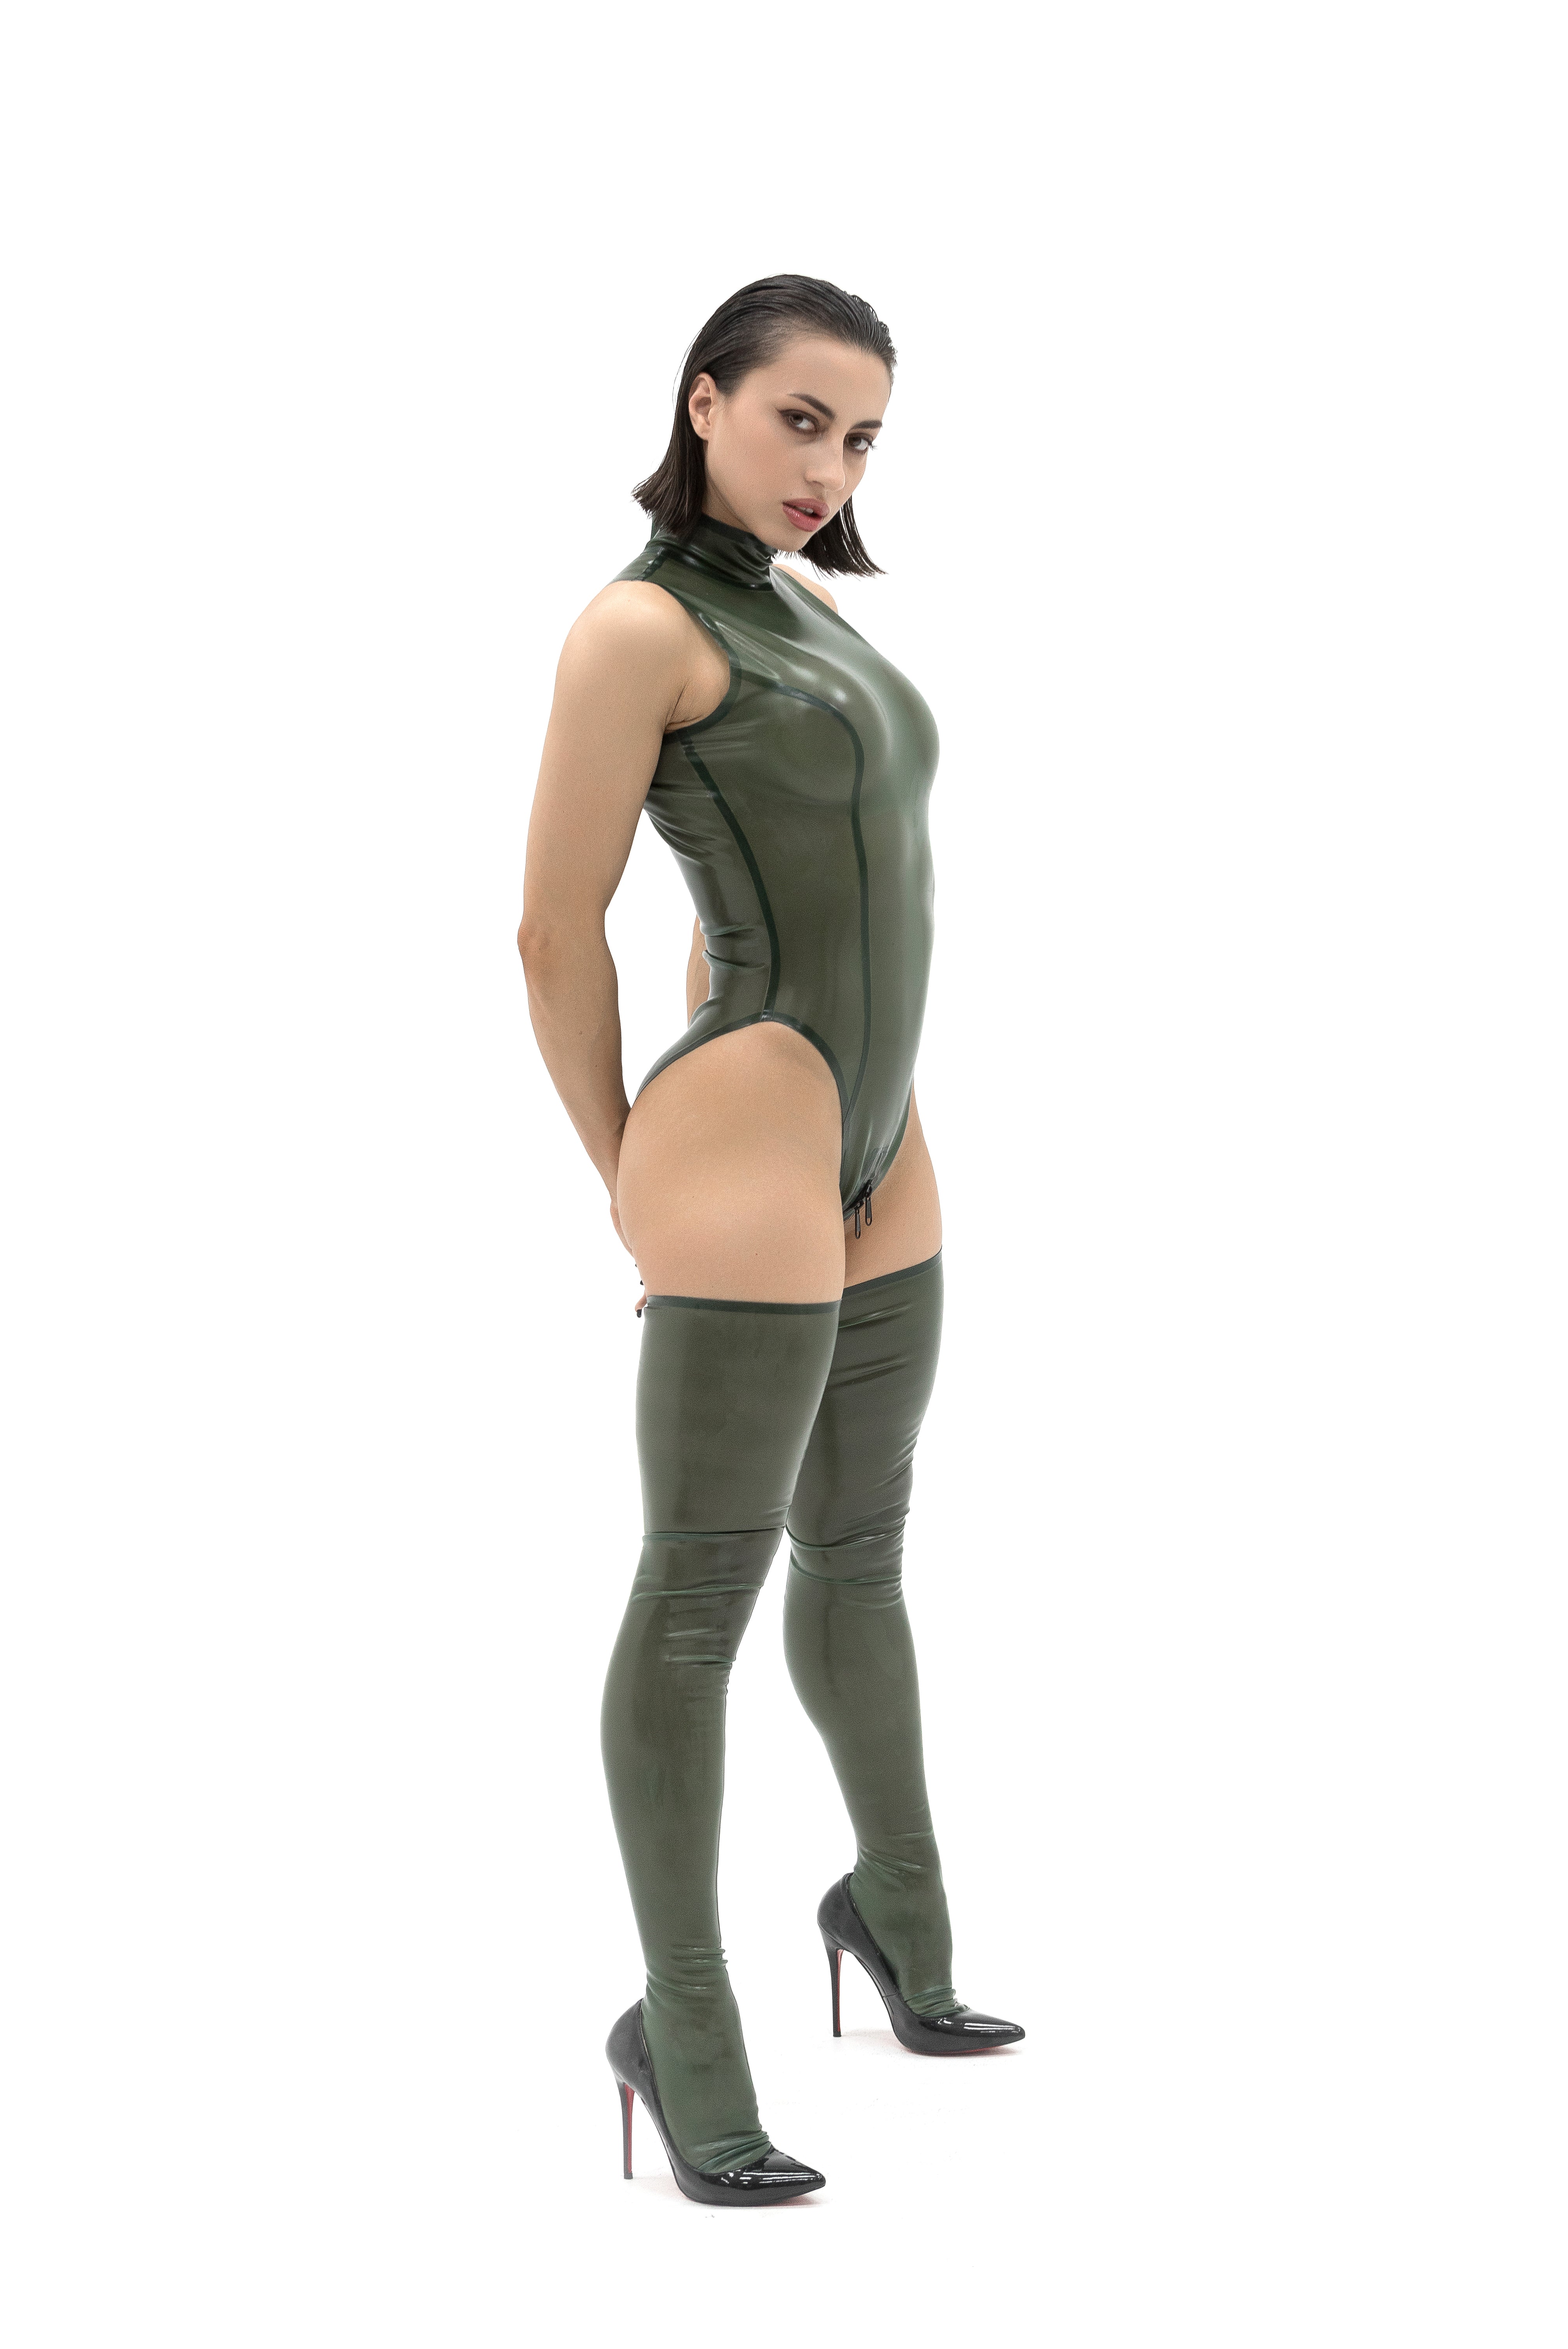 Semi-transparent Olive Latex Bodysuit, Latex Stockings